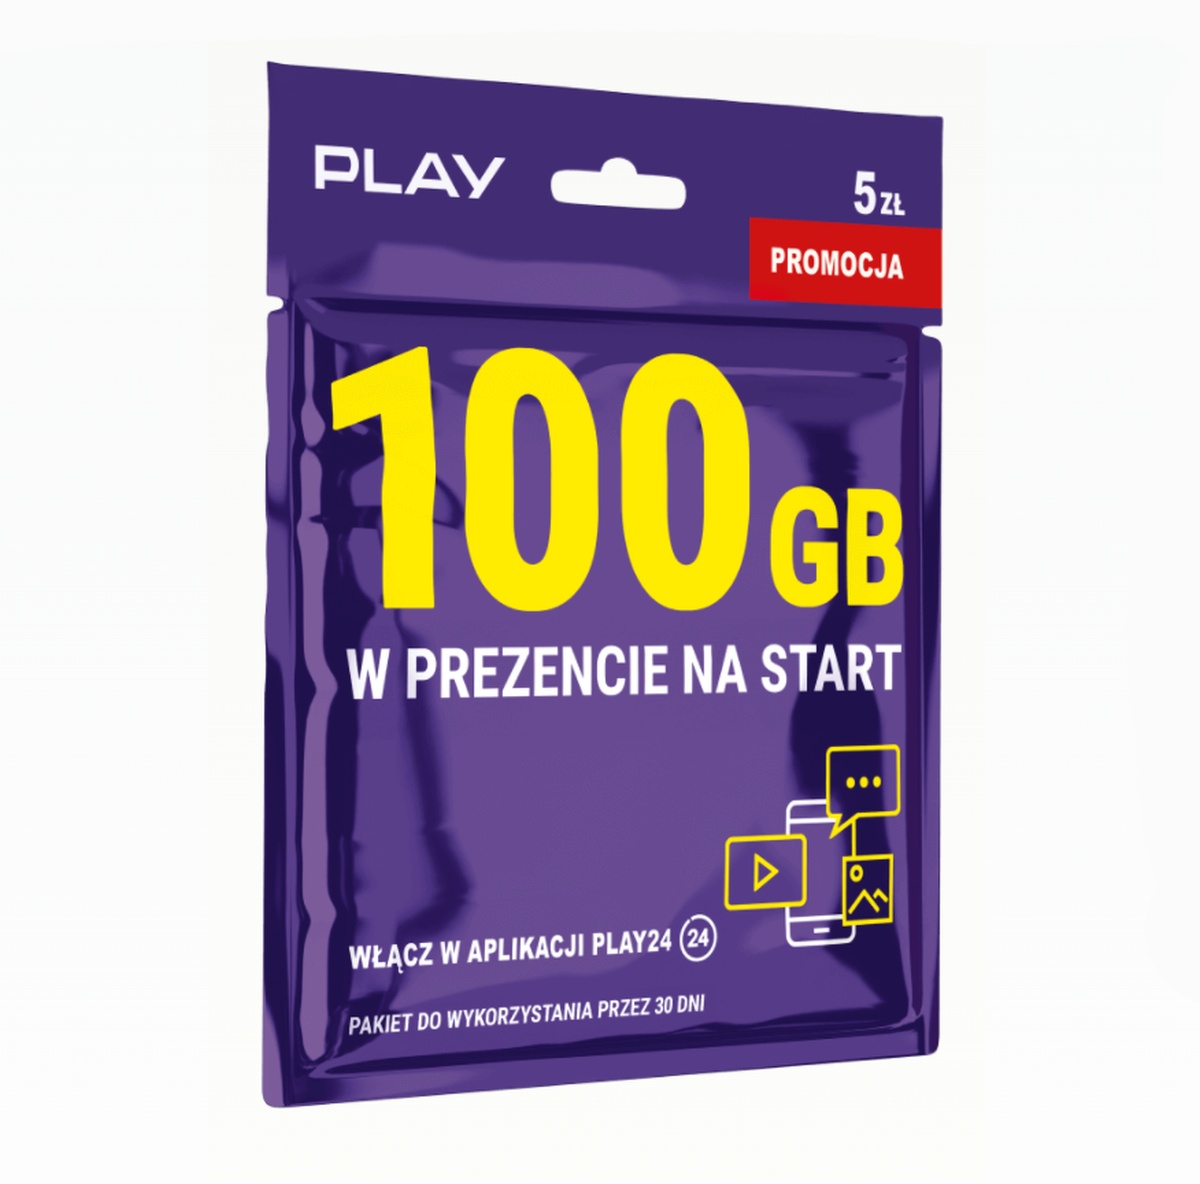 Play 100 GB starter